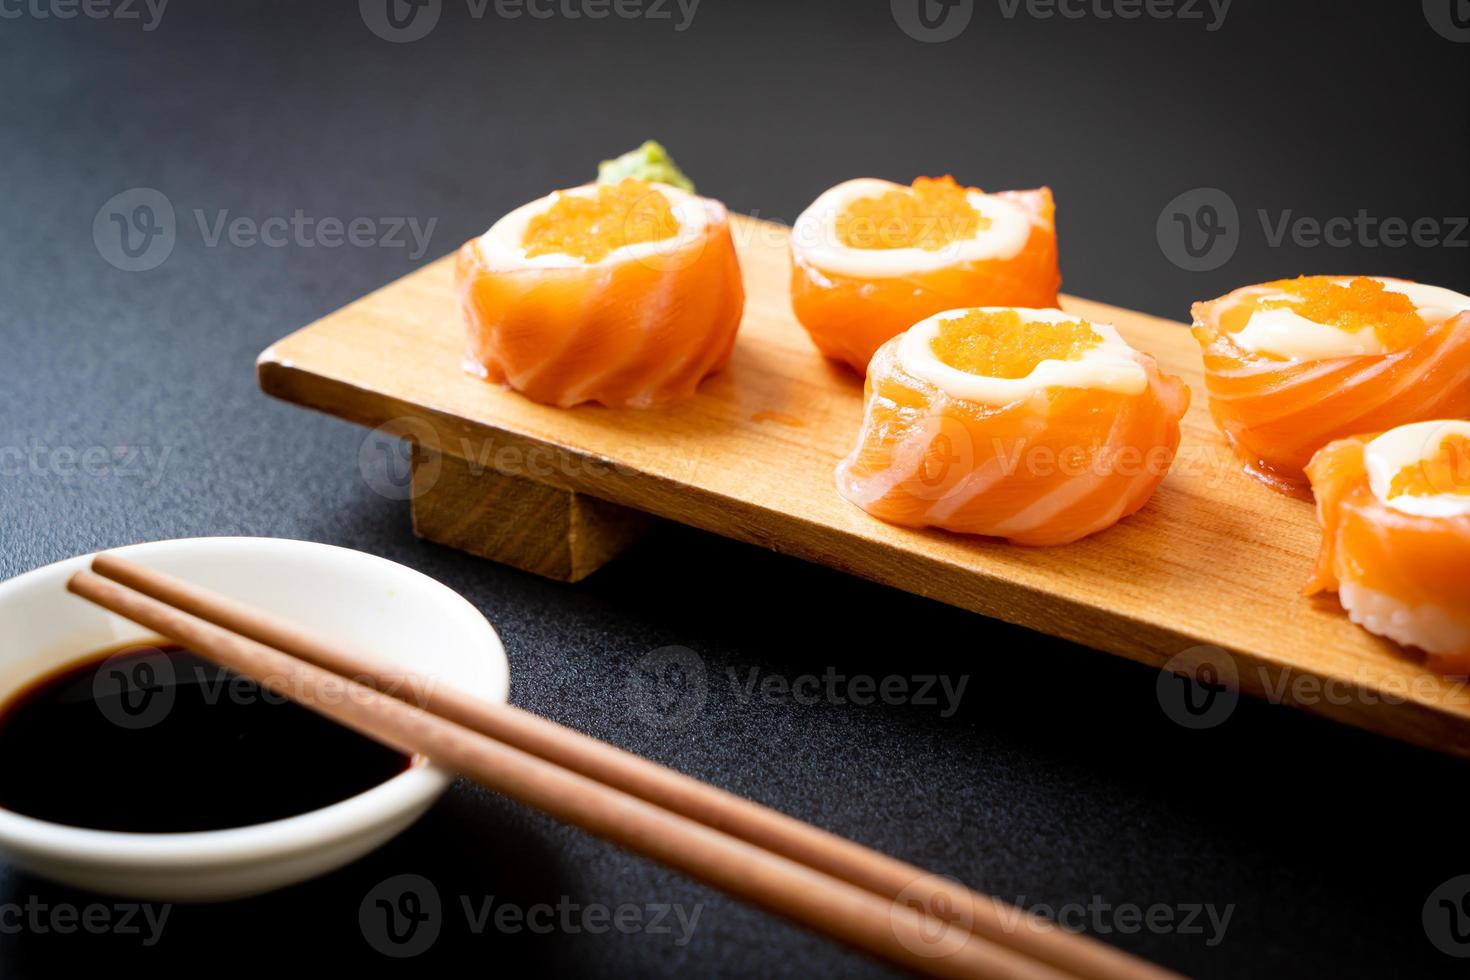 verse zalm sushi roll met mayonaise en garnalen ei - japanse food style foto